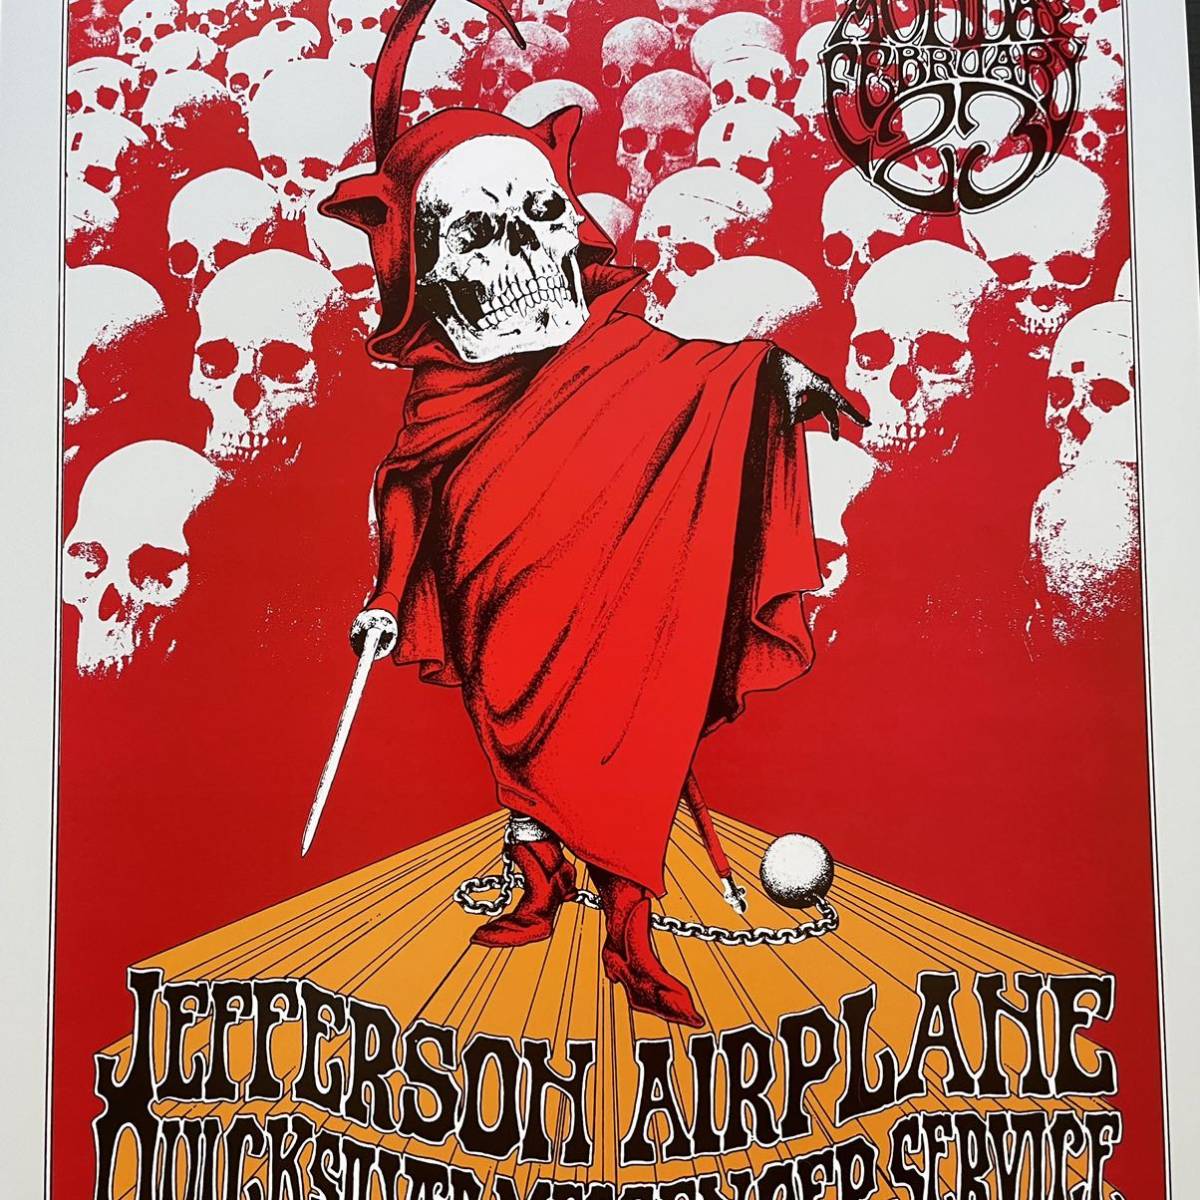  poster *1970je fur son* air plain [ grate full * dead bene Fit ] concert poster *Jefferson Airplane/Santana